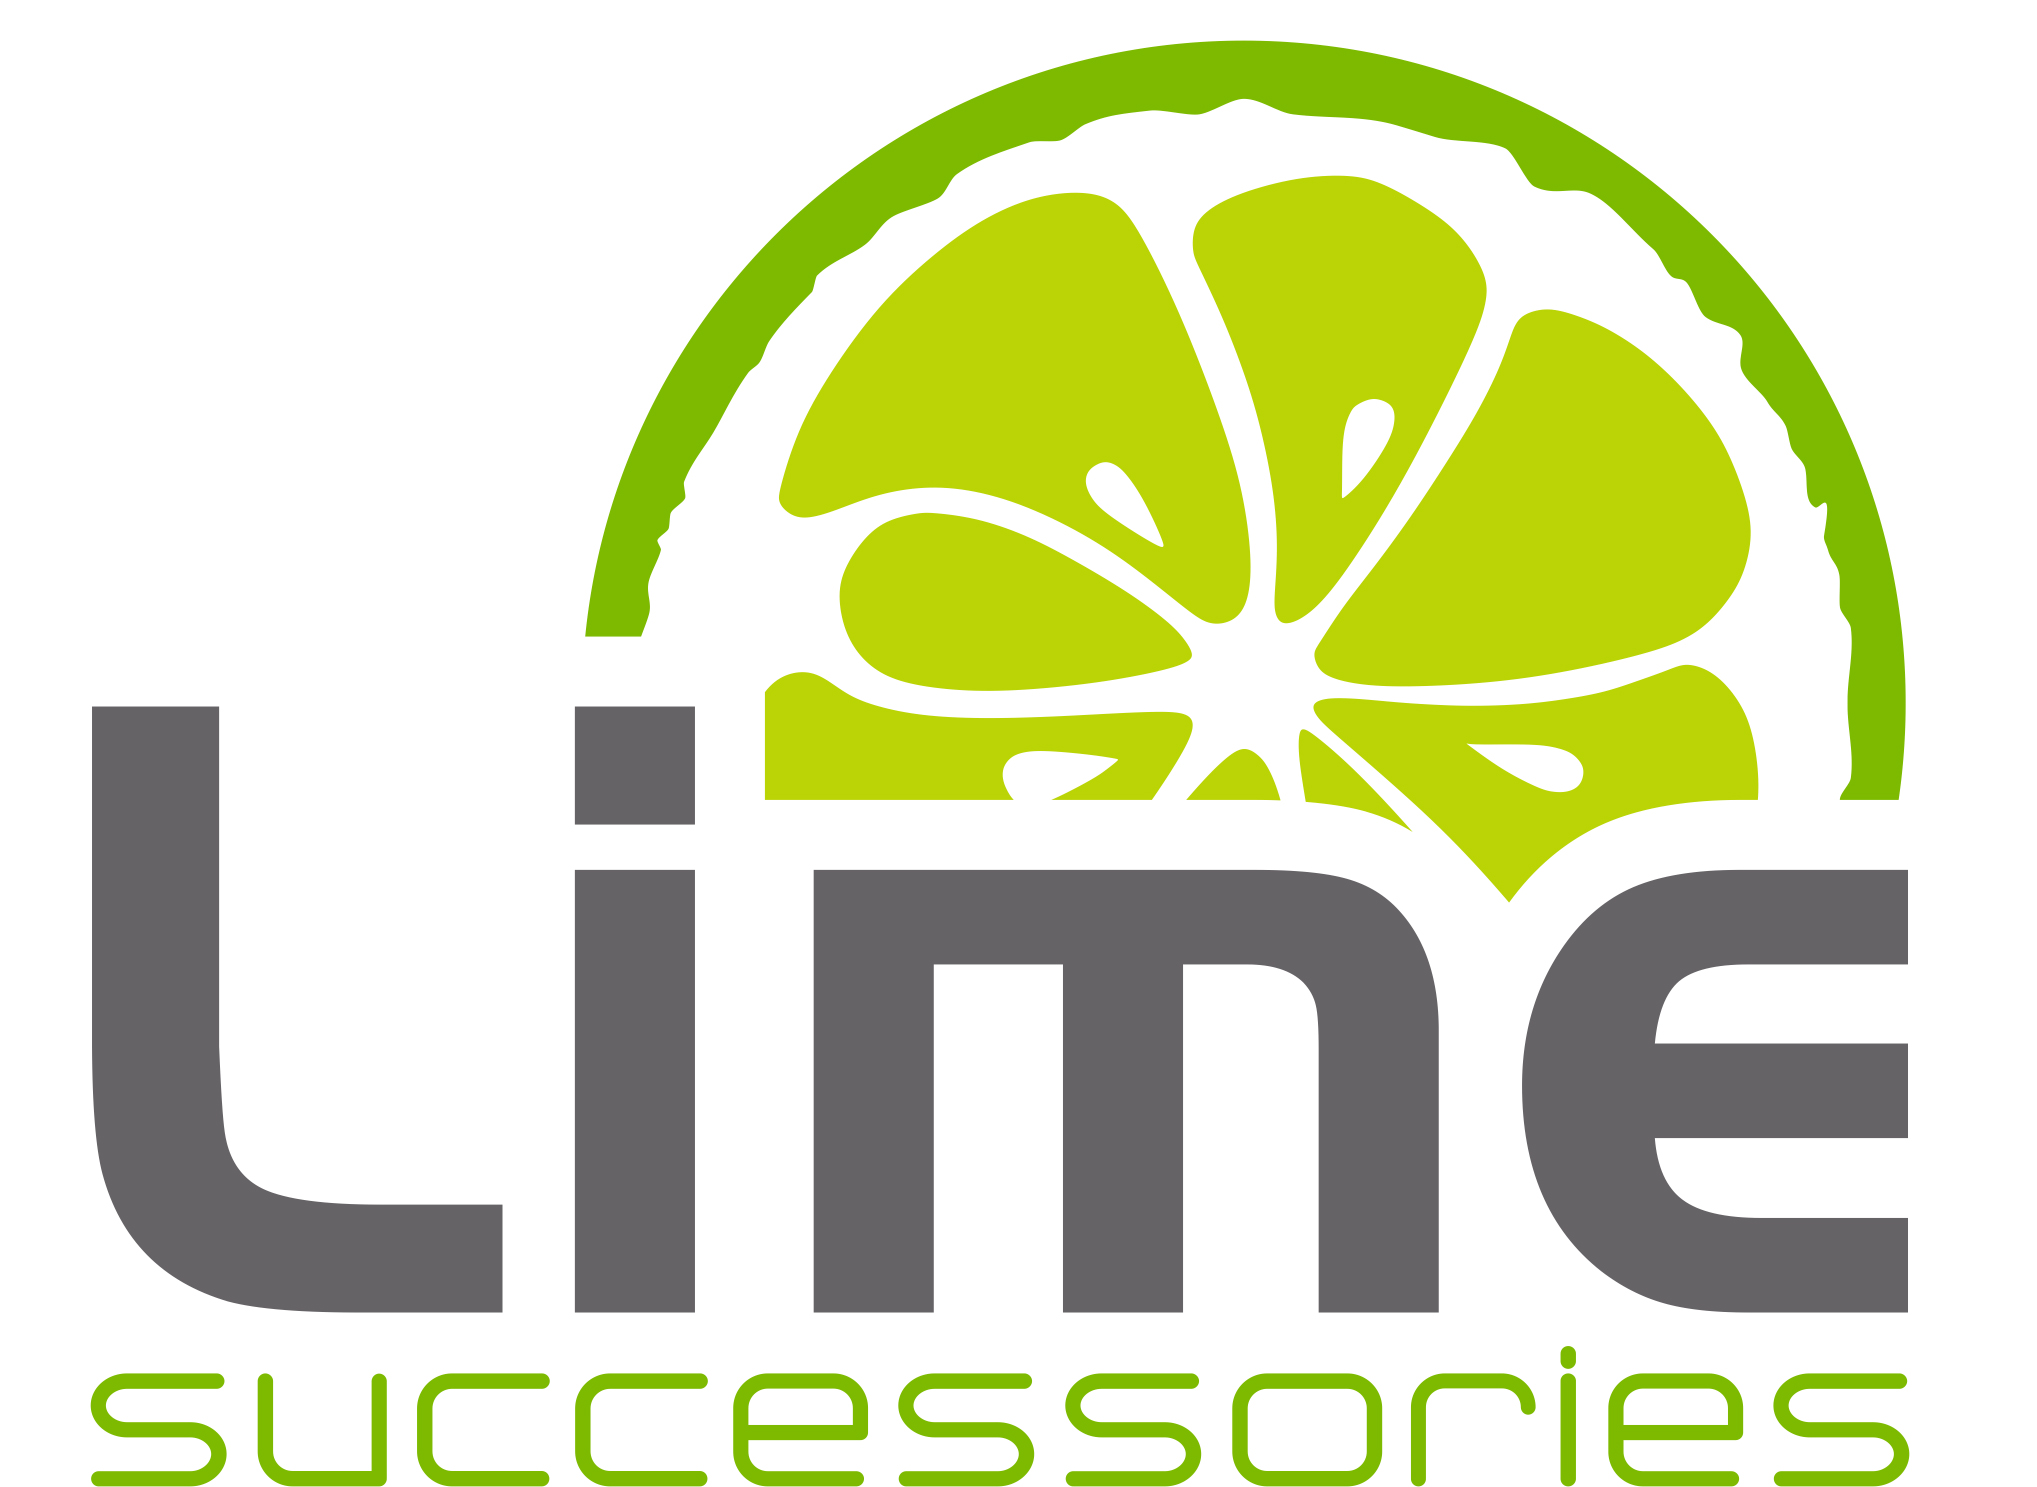 Lime Официальный Сайт Интернет Магазин Каталог